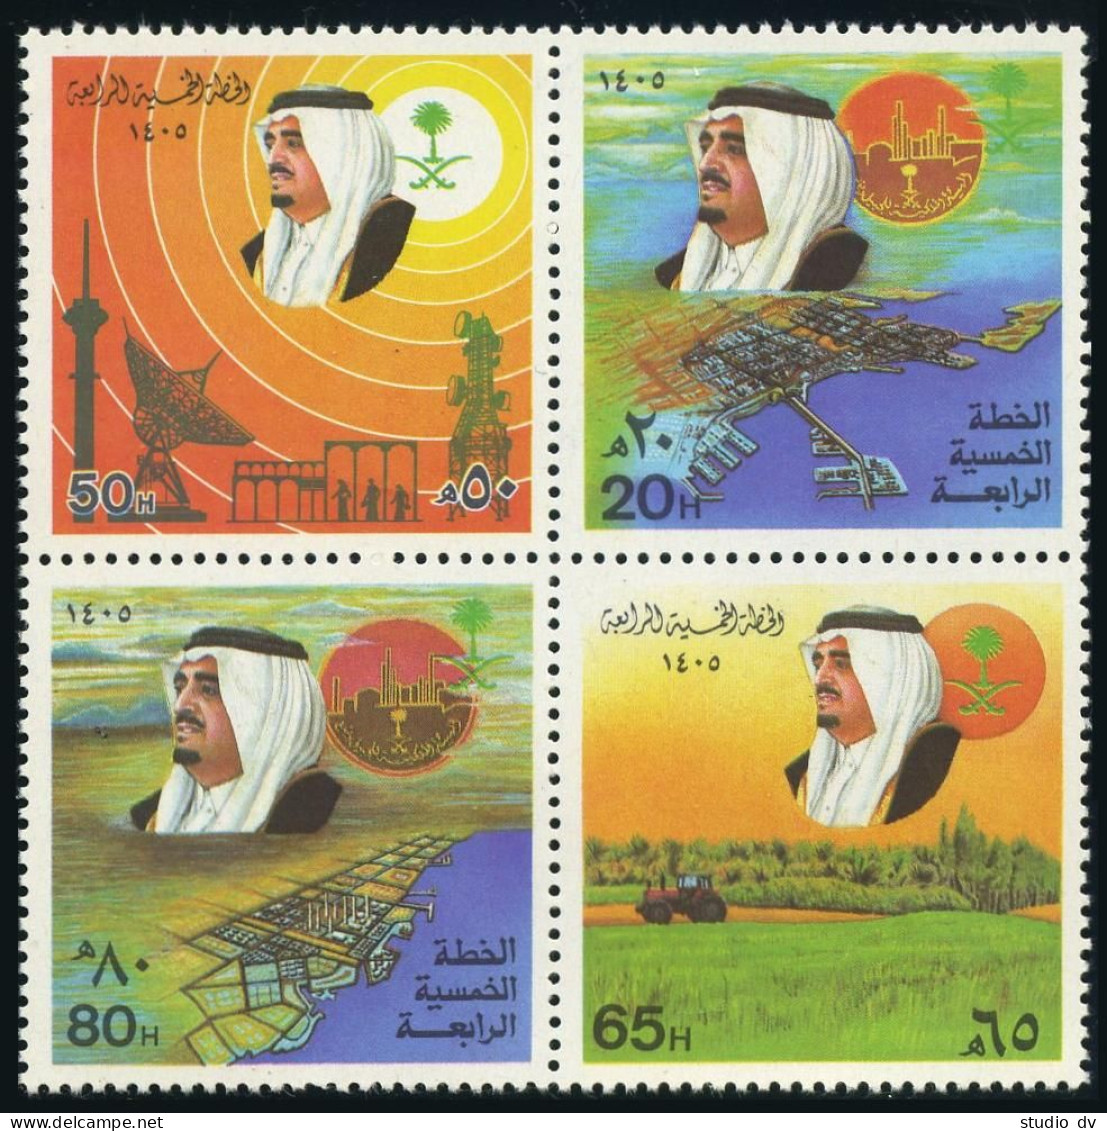 Saudi Arabia 927-930a, MNH. Mi 800-803. Development Plan, 1985. King Fahd.Harbor - Arabie Saoudite